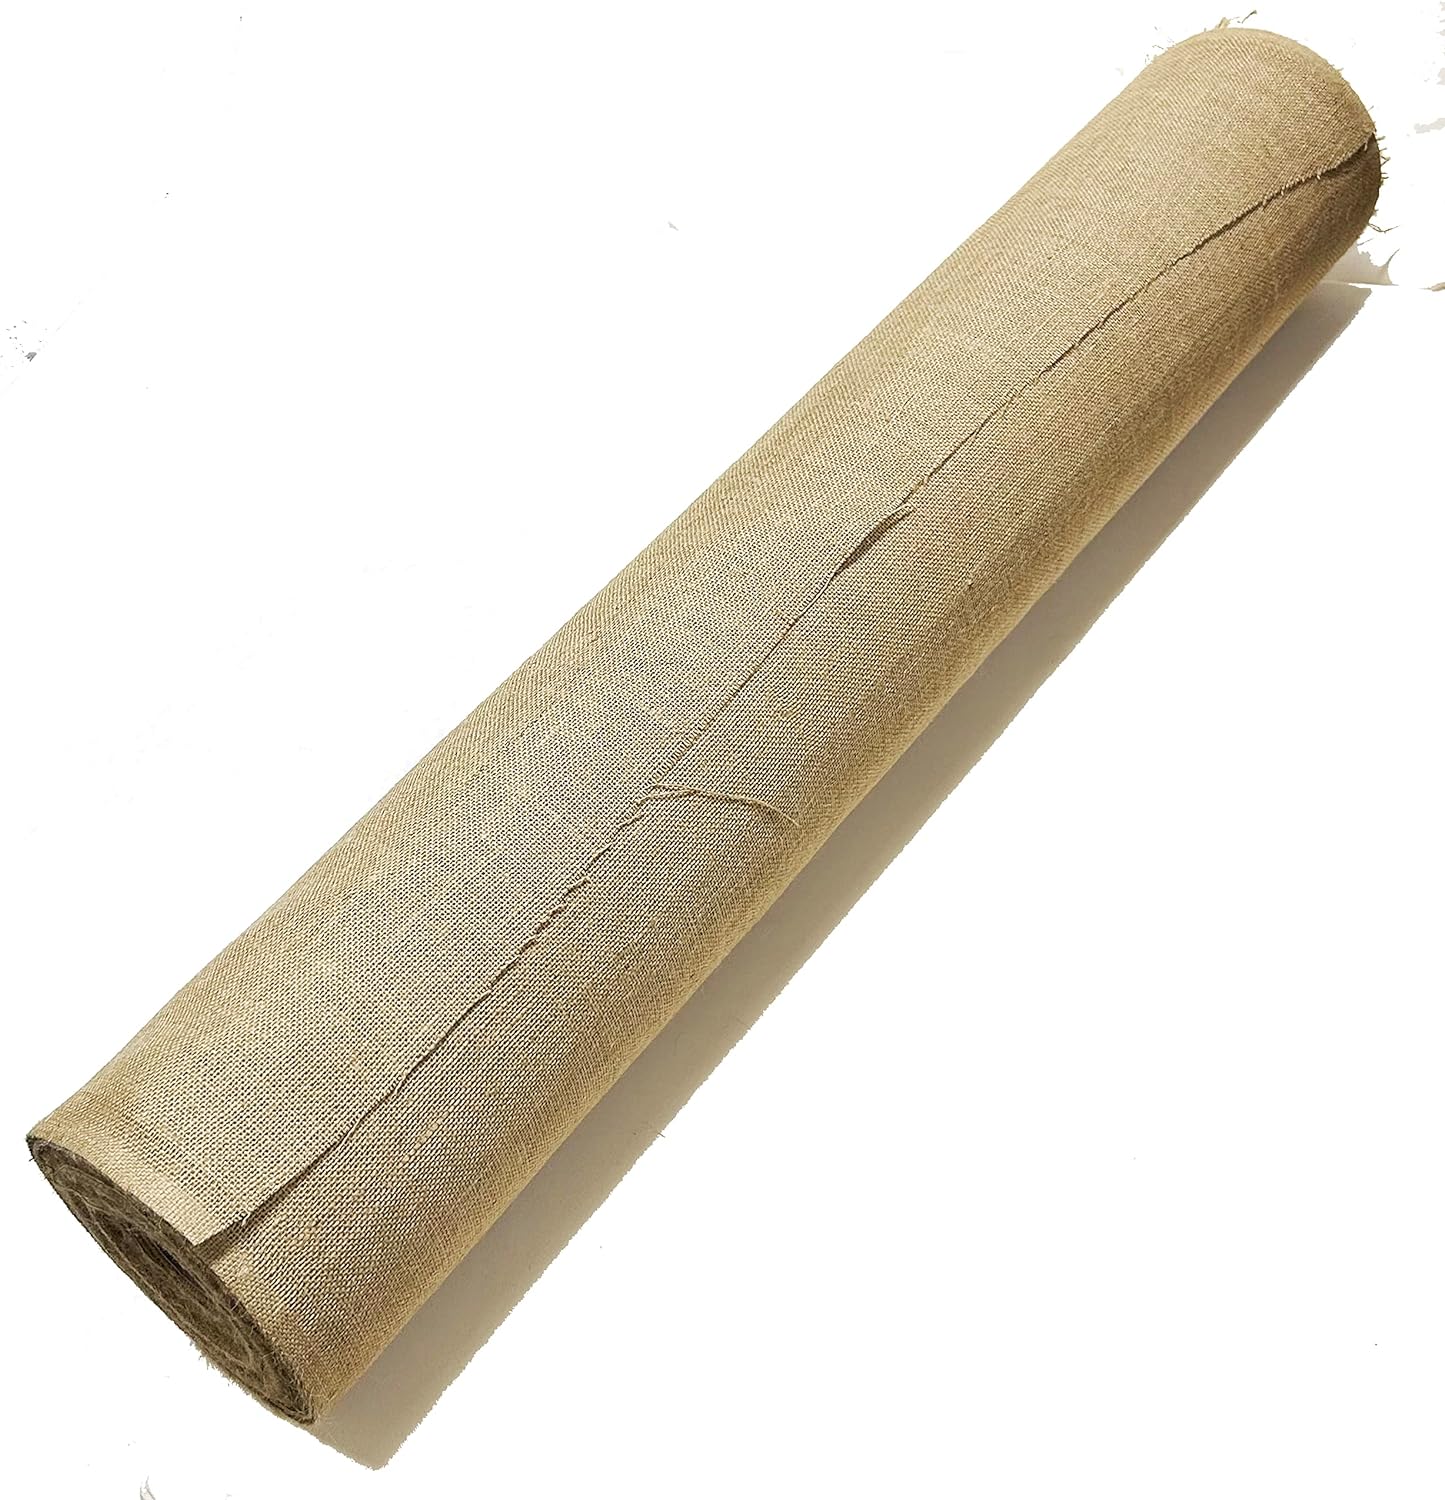 36 inches Wide x 60 feet Long Burlap Roll - Premium Jute Liner